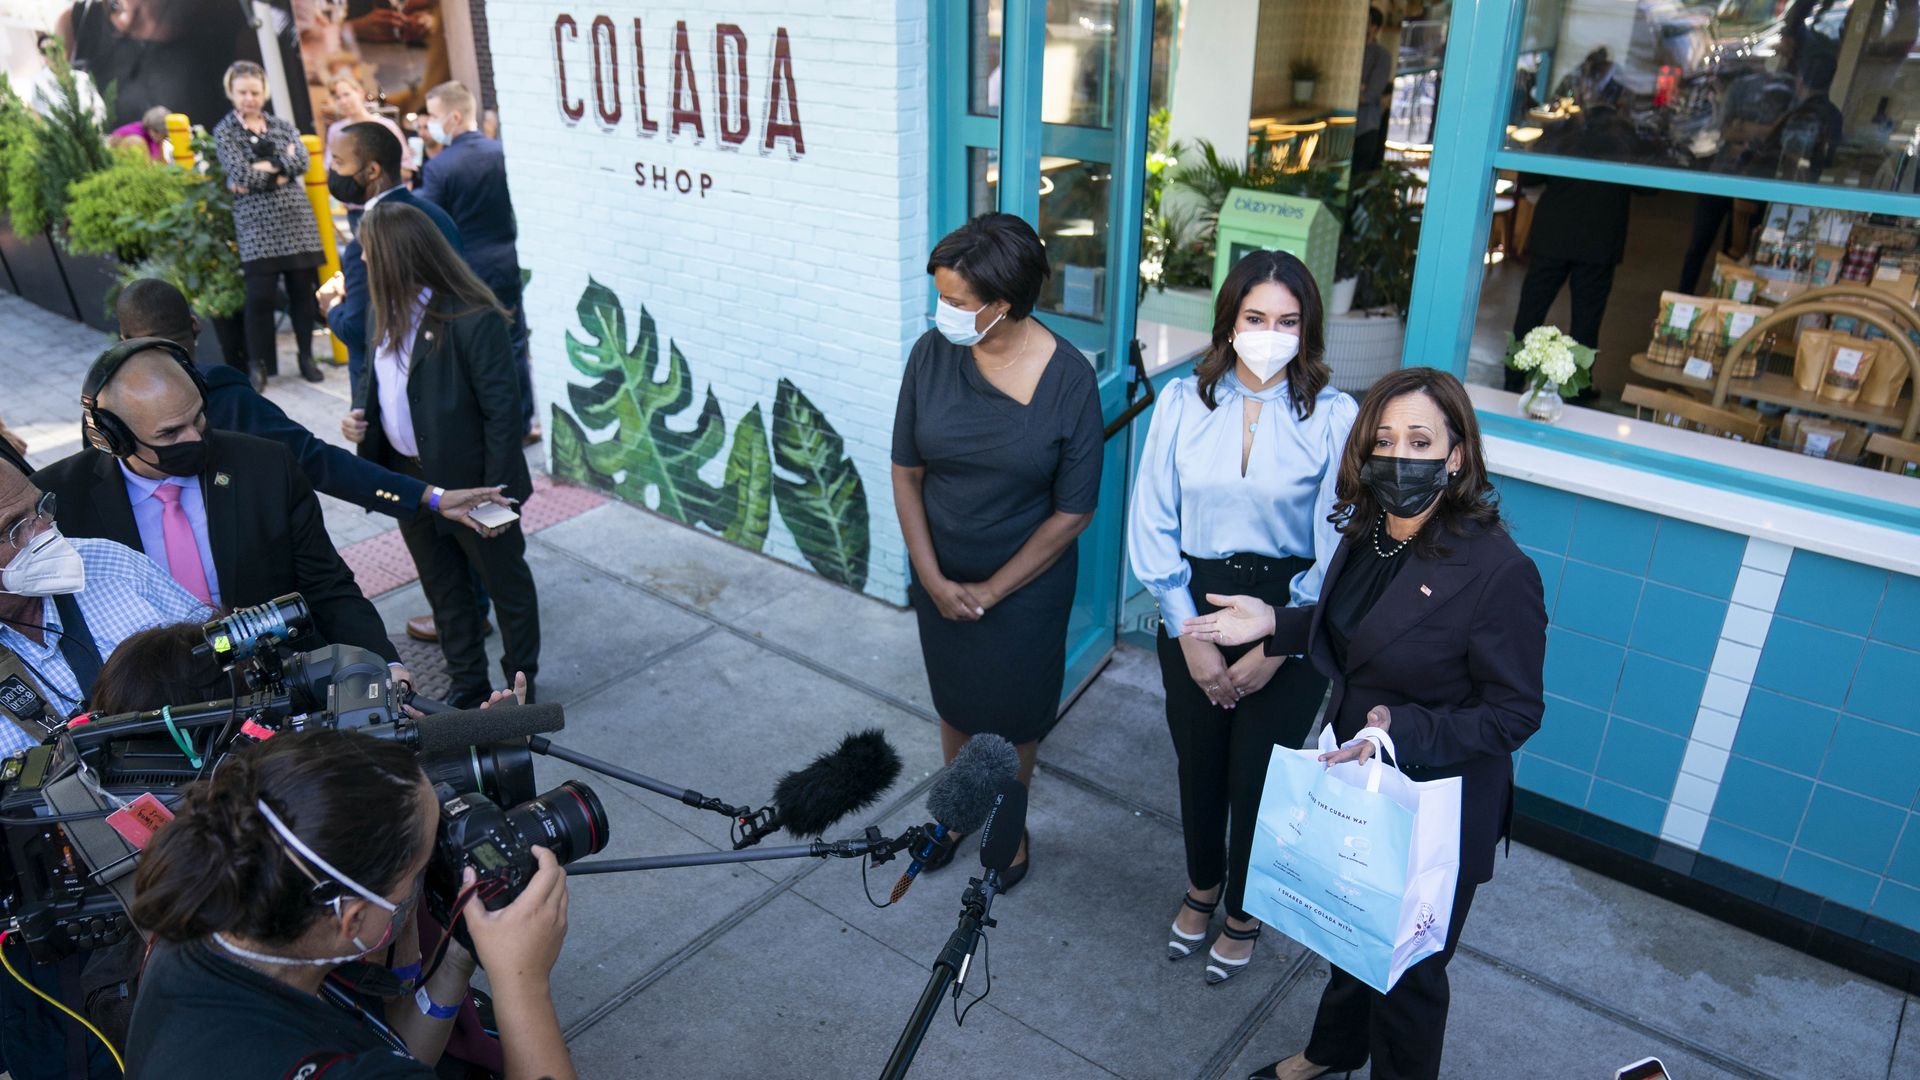 Vice President Kamala Harris is seen speaking with reporters outside a Cuban coffee shop in Washington.